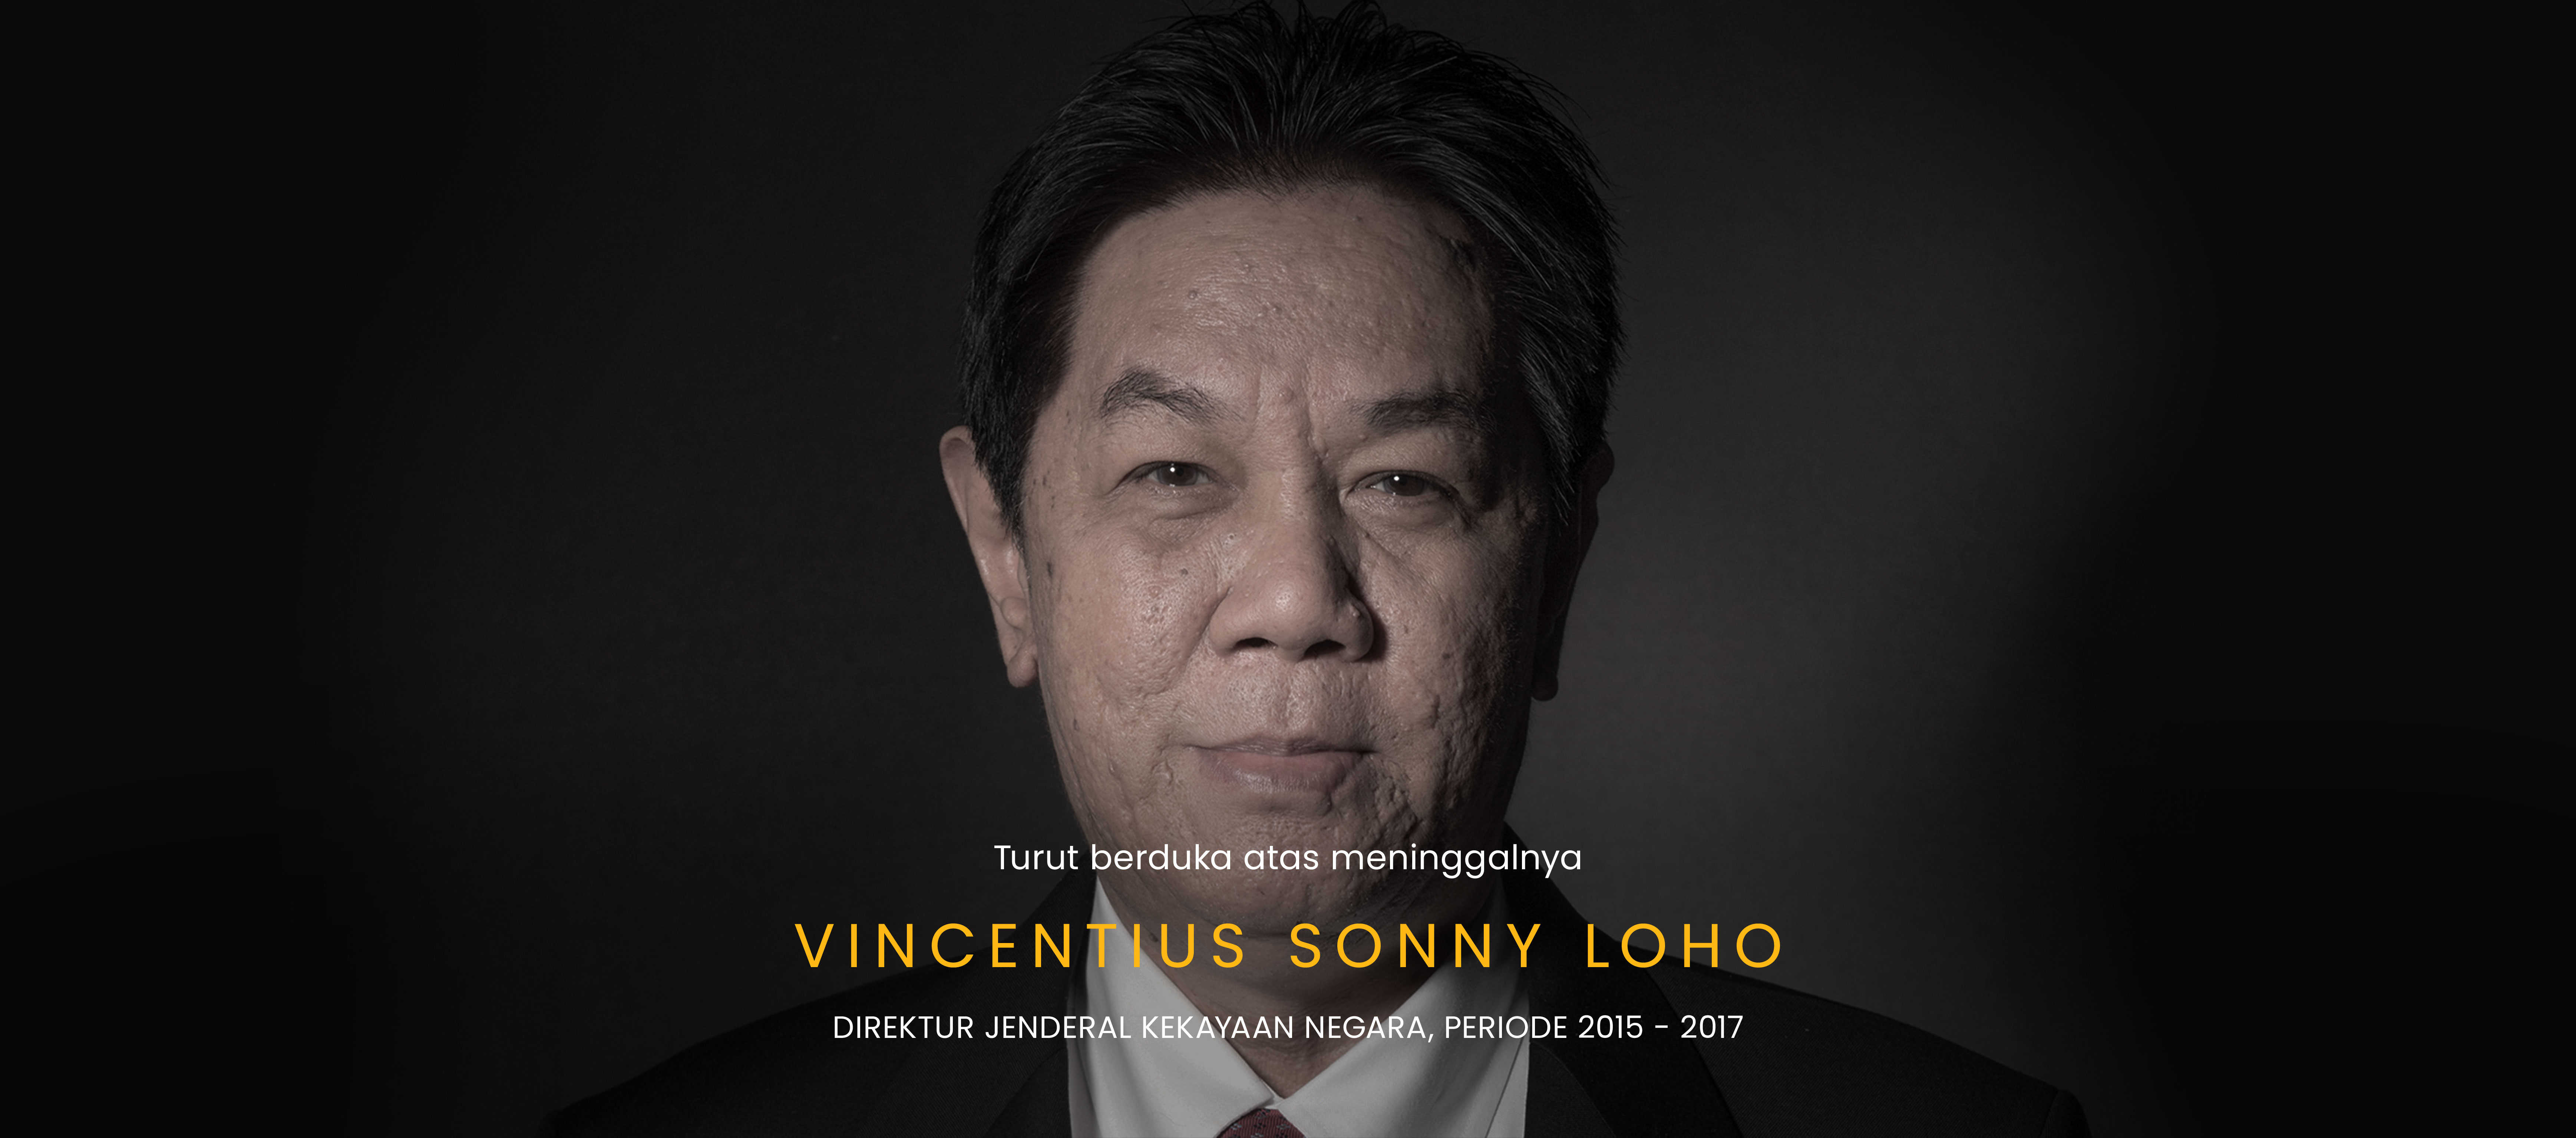 KPKNL Mataram Turut Berduka atas Meninggalnya Bapak Vincentius Sonny Loho, Direktur Jenderal Kekayaan Negara Periode 2015-2017 ❁❁❁